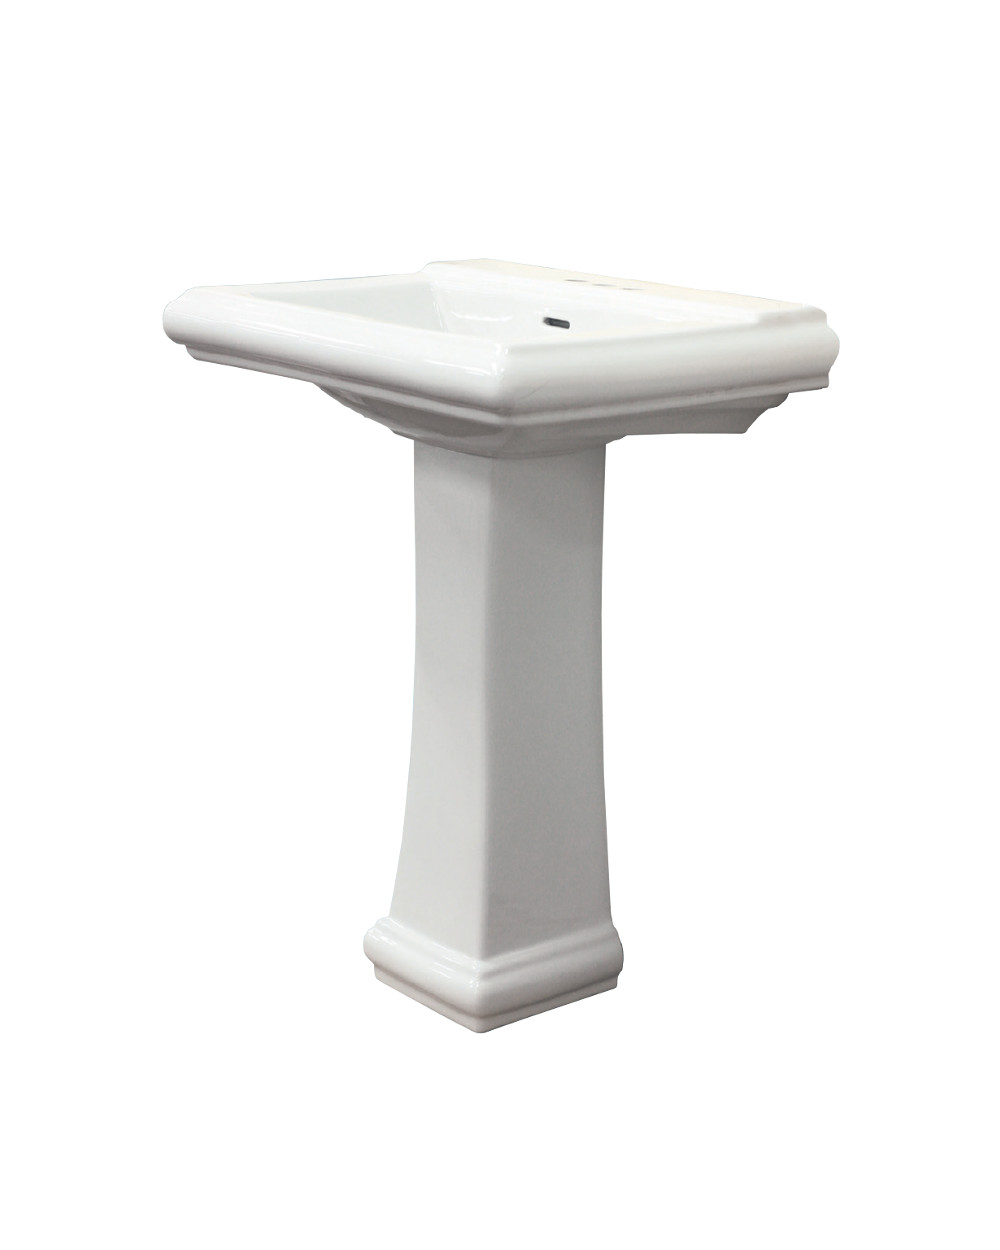 Avalon Pedestal Sink & Base in White